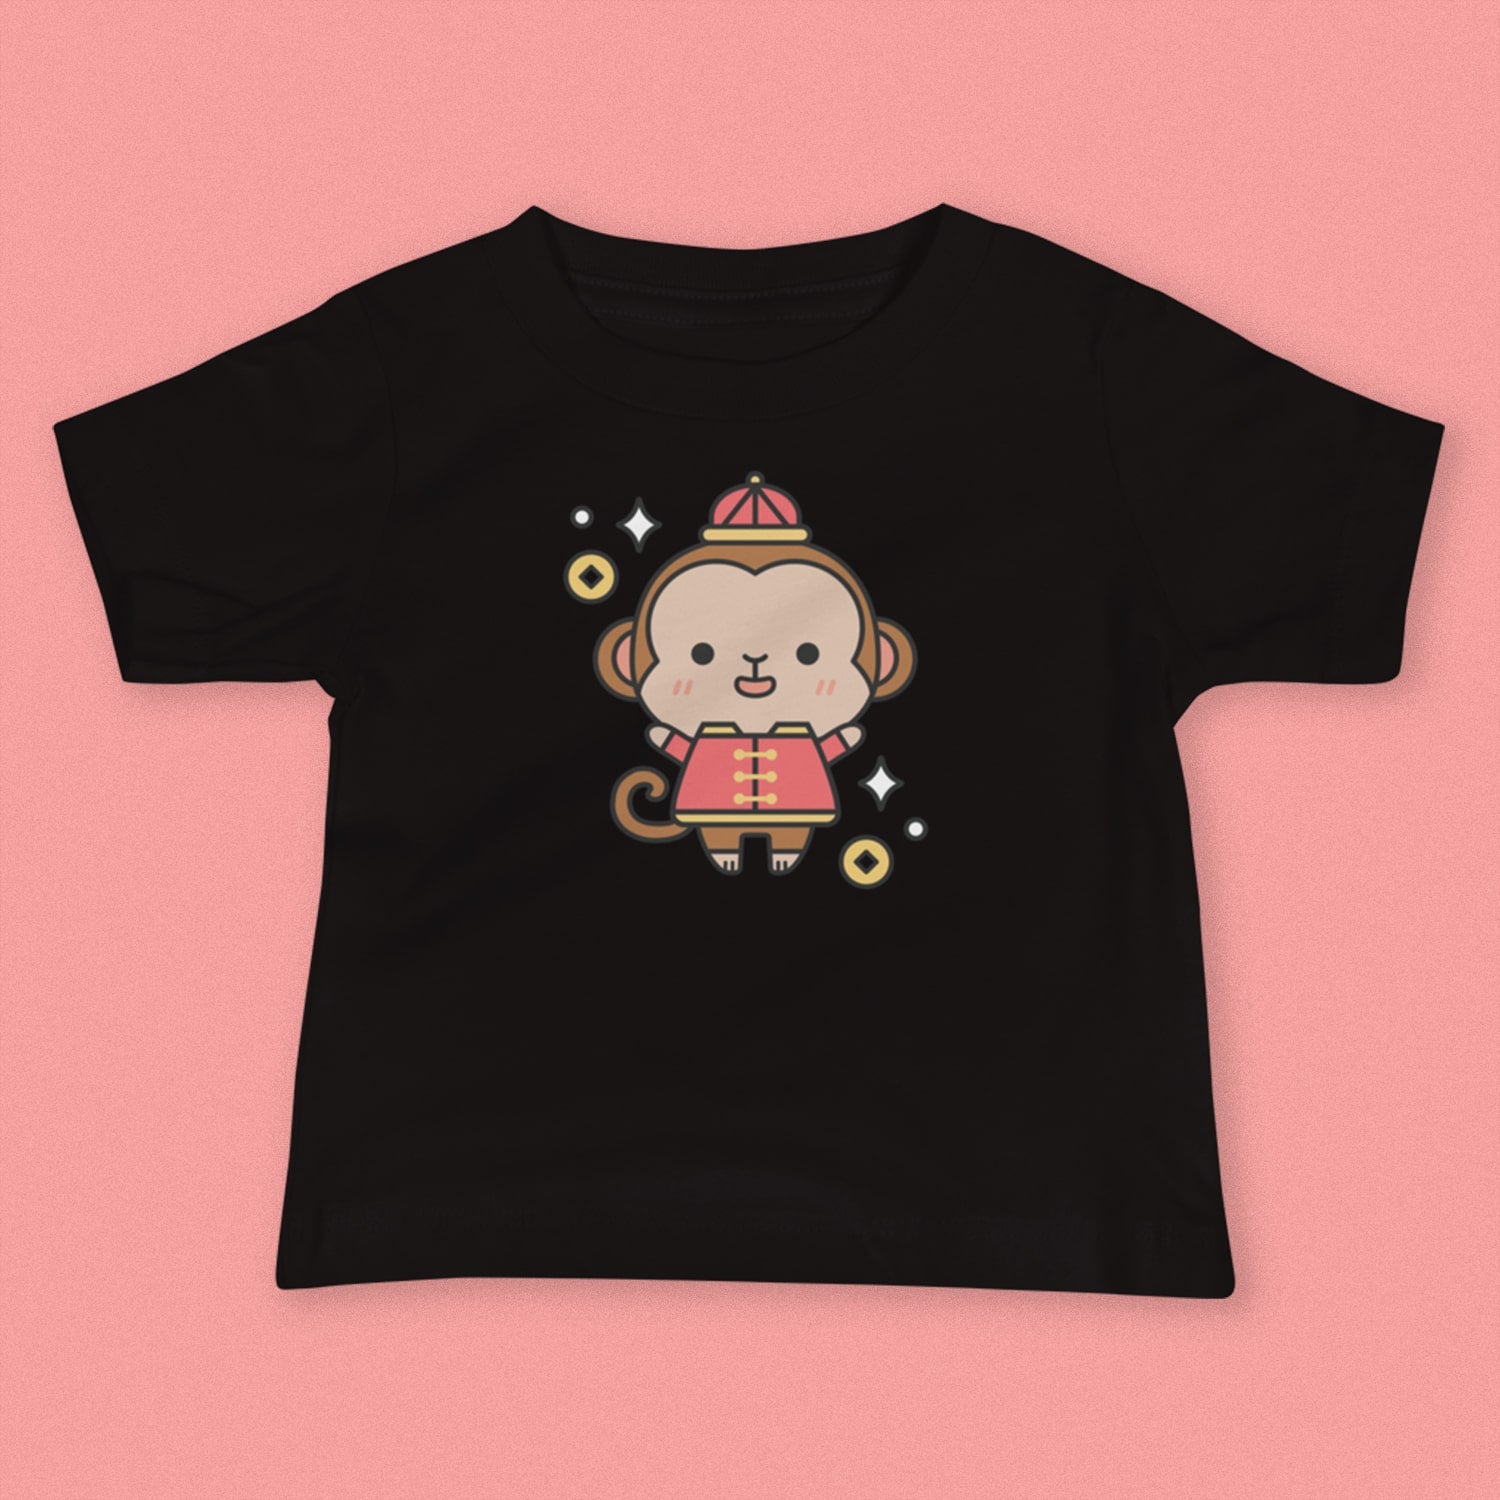 Year of the Monkey Baby T-Shirt - Ni De Mama Chinese Clothing